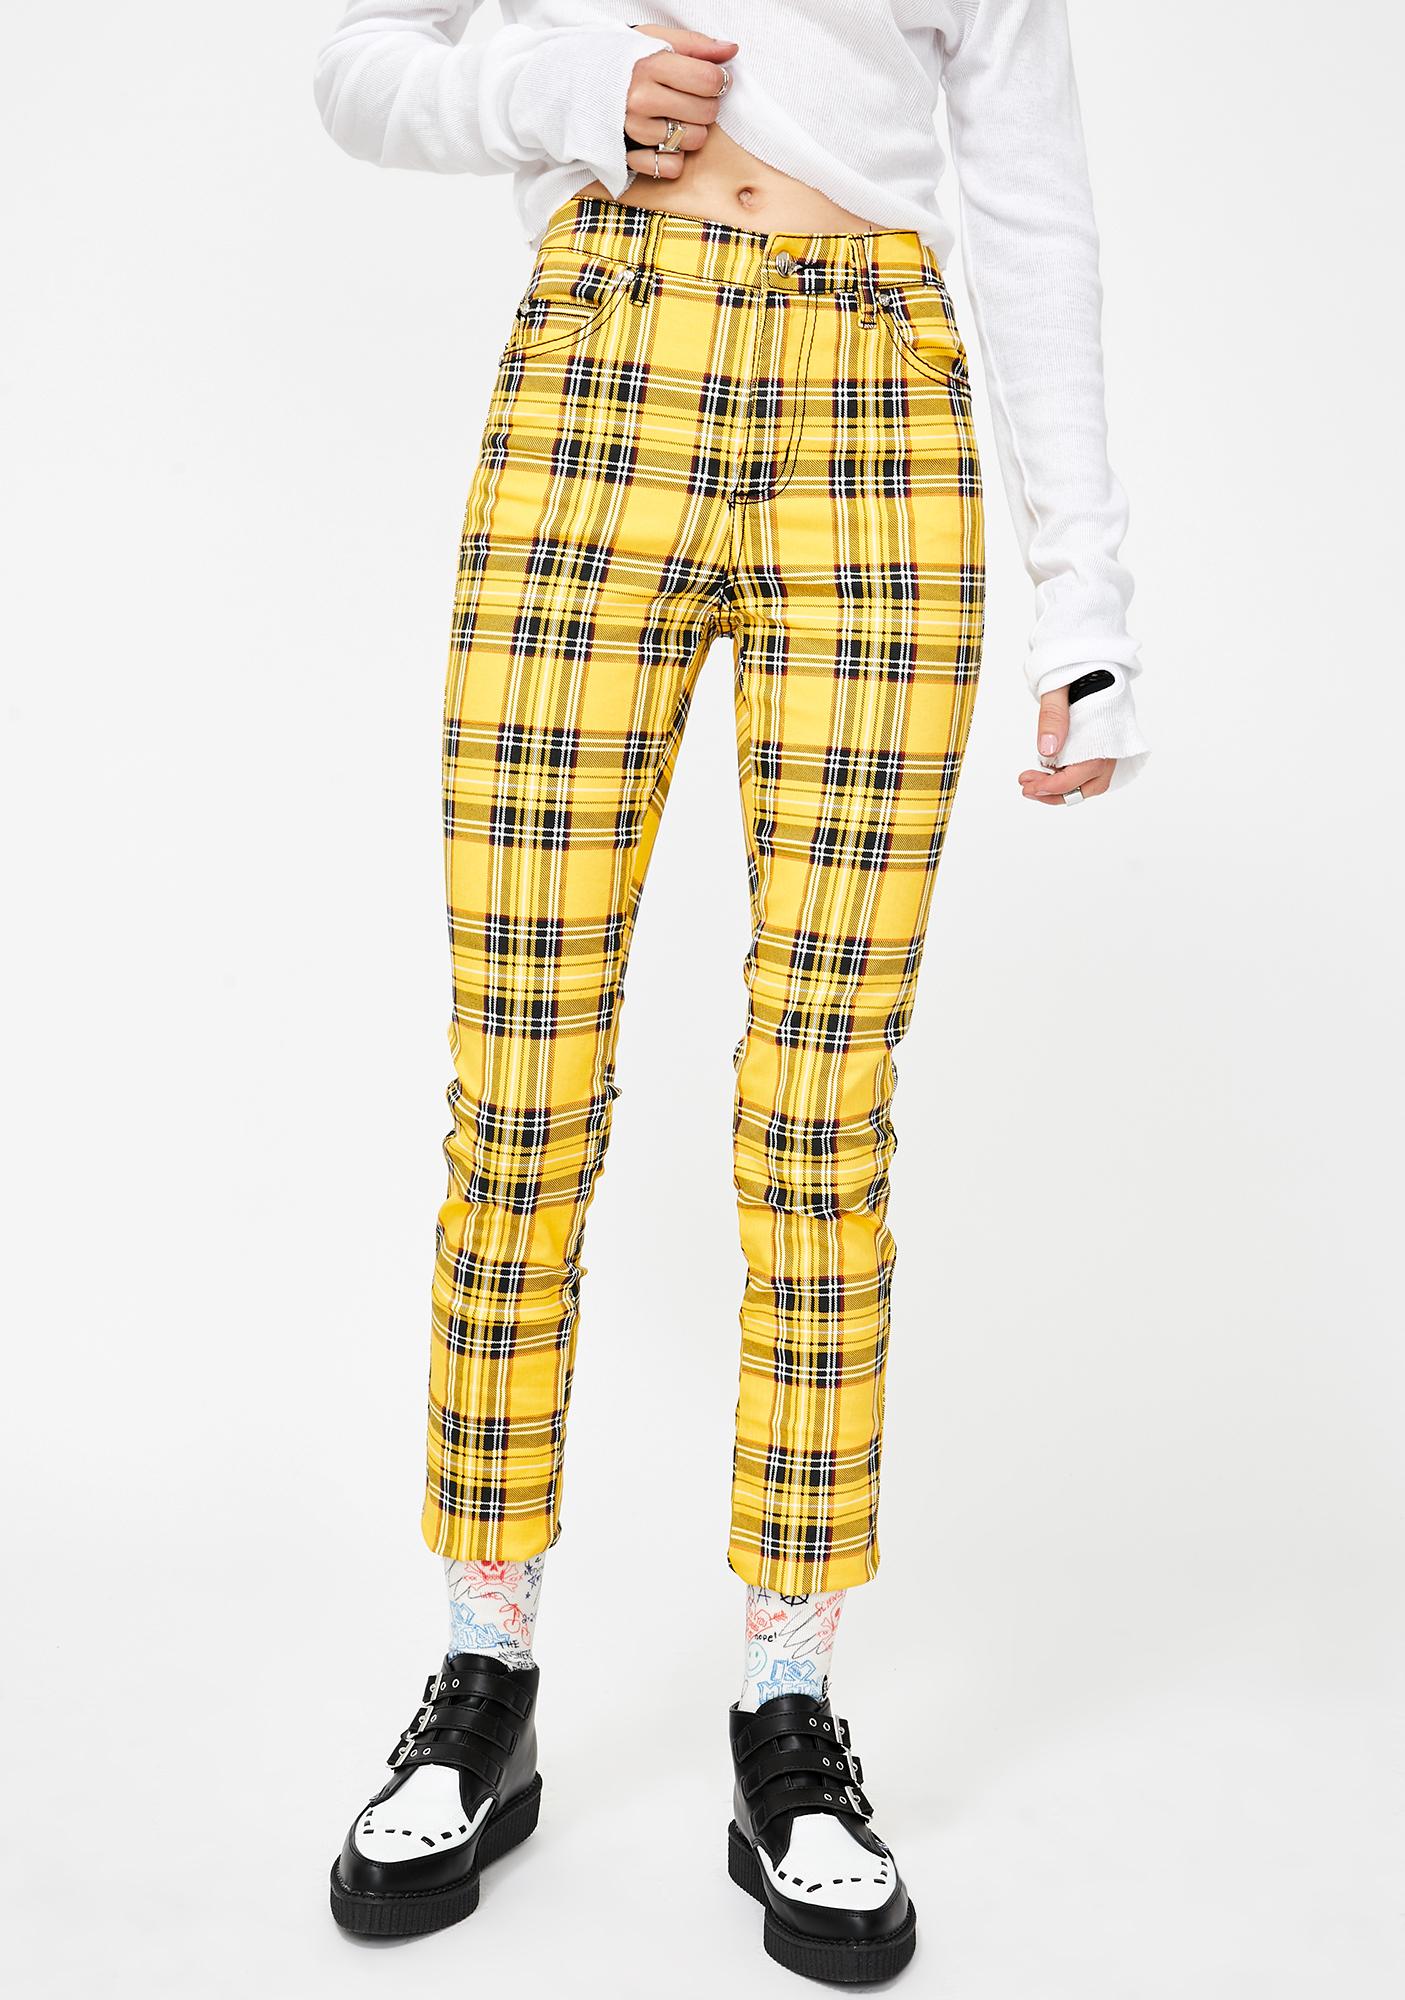 grey and yellow plaid pants